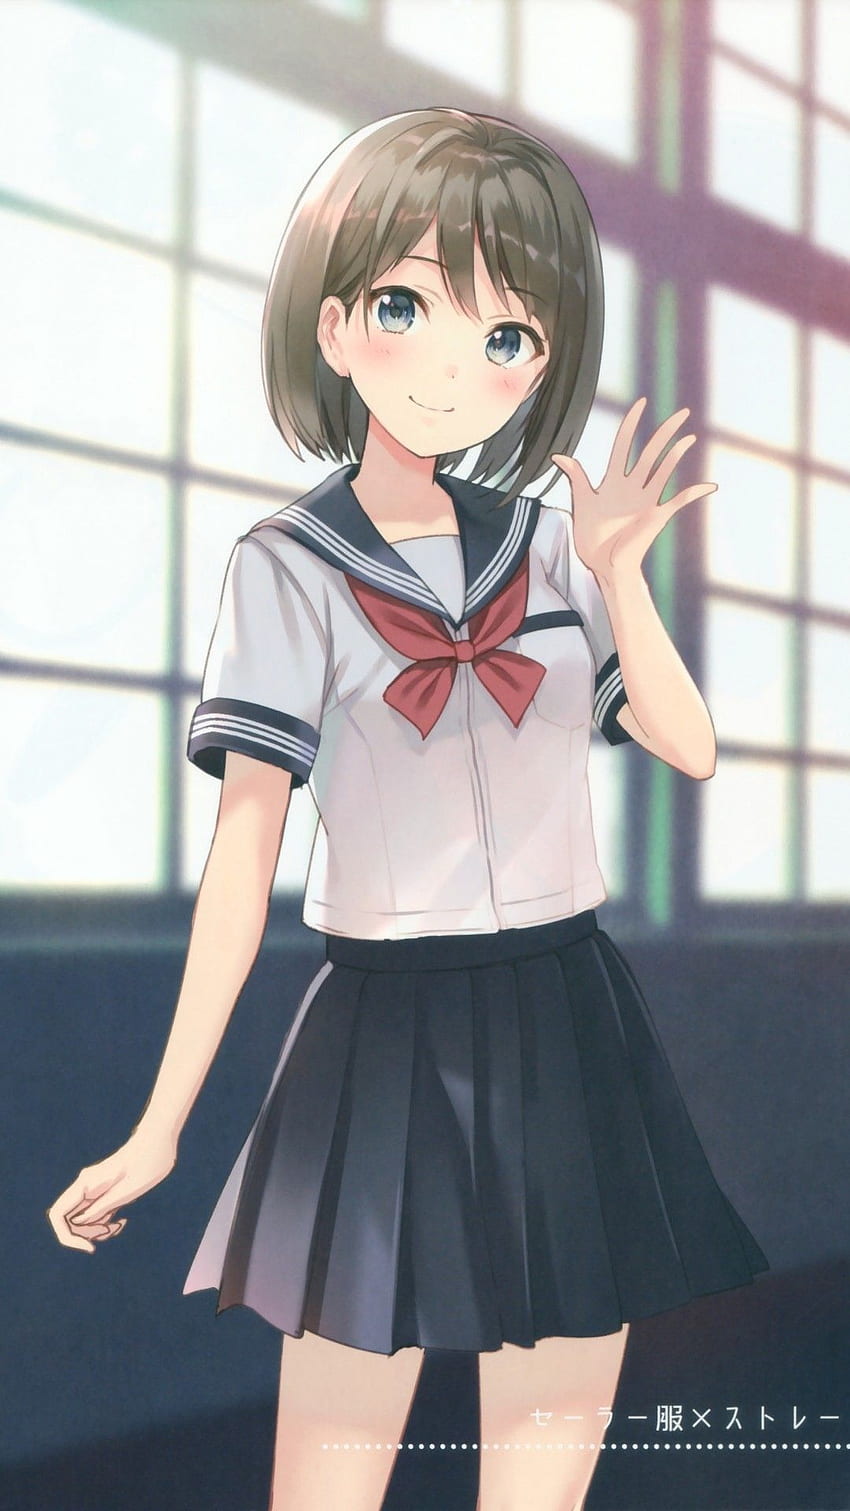 Gadis Anime Berseragam , Sekolah Gadis Anime wallpaper ponsel HD